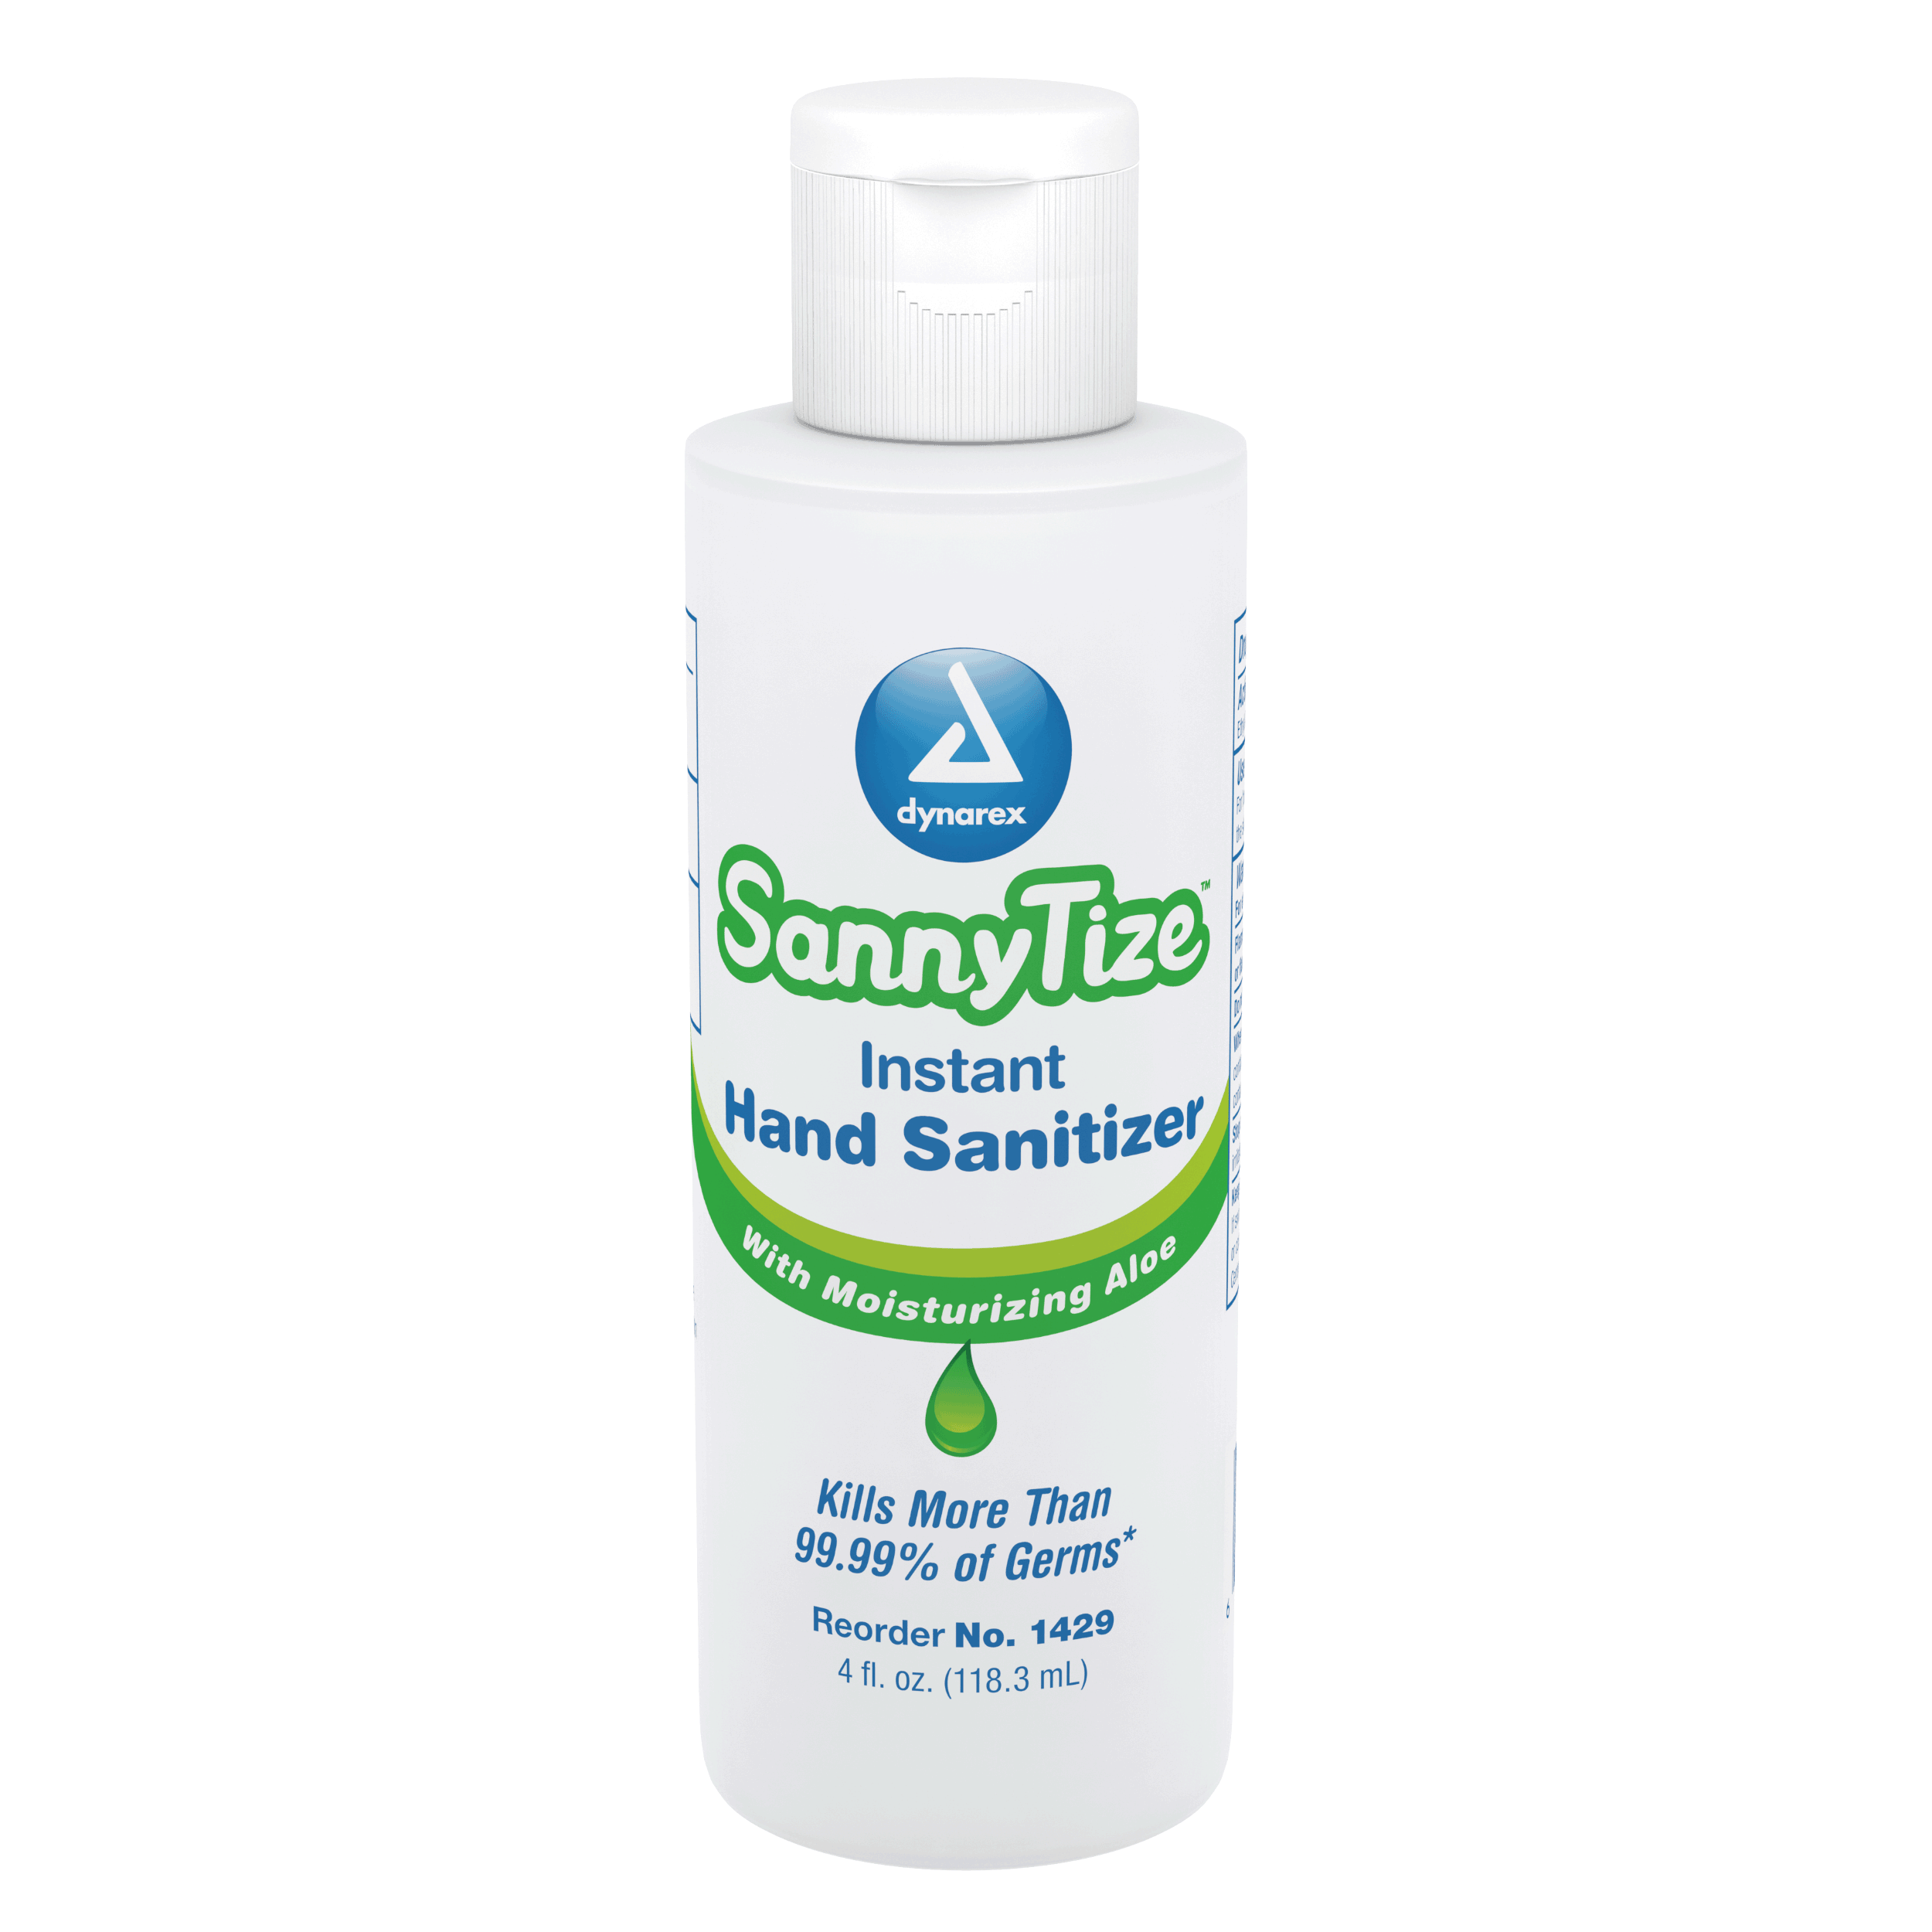 SannyTize Instant Hand Sanitizer 4 oz - round bottle